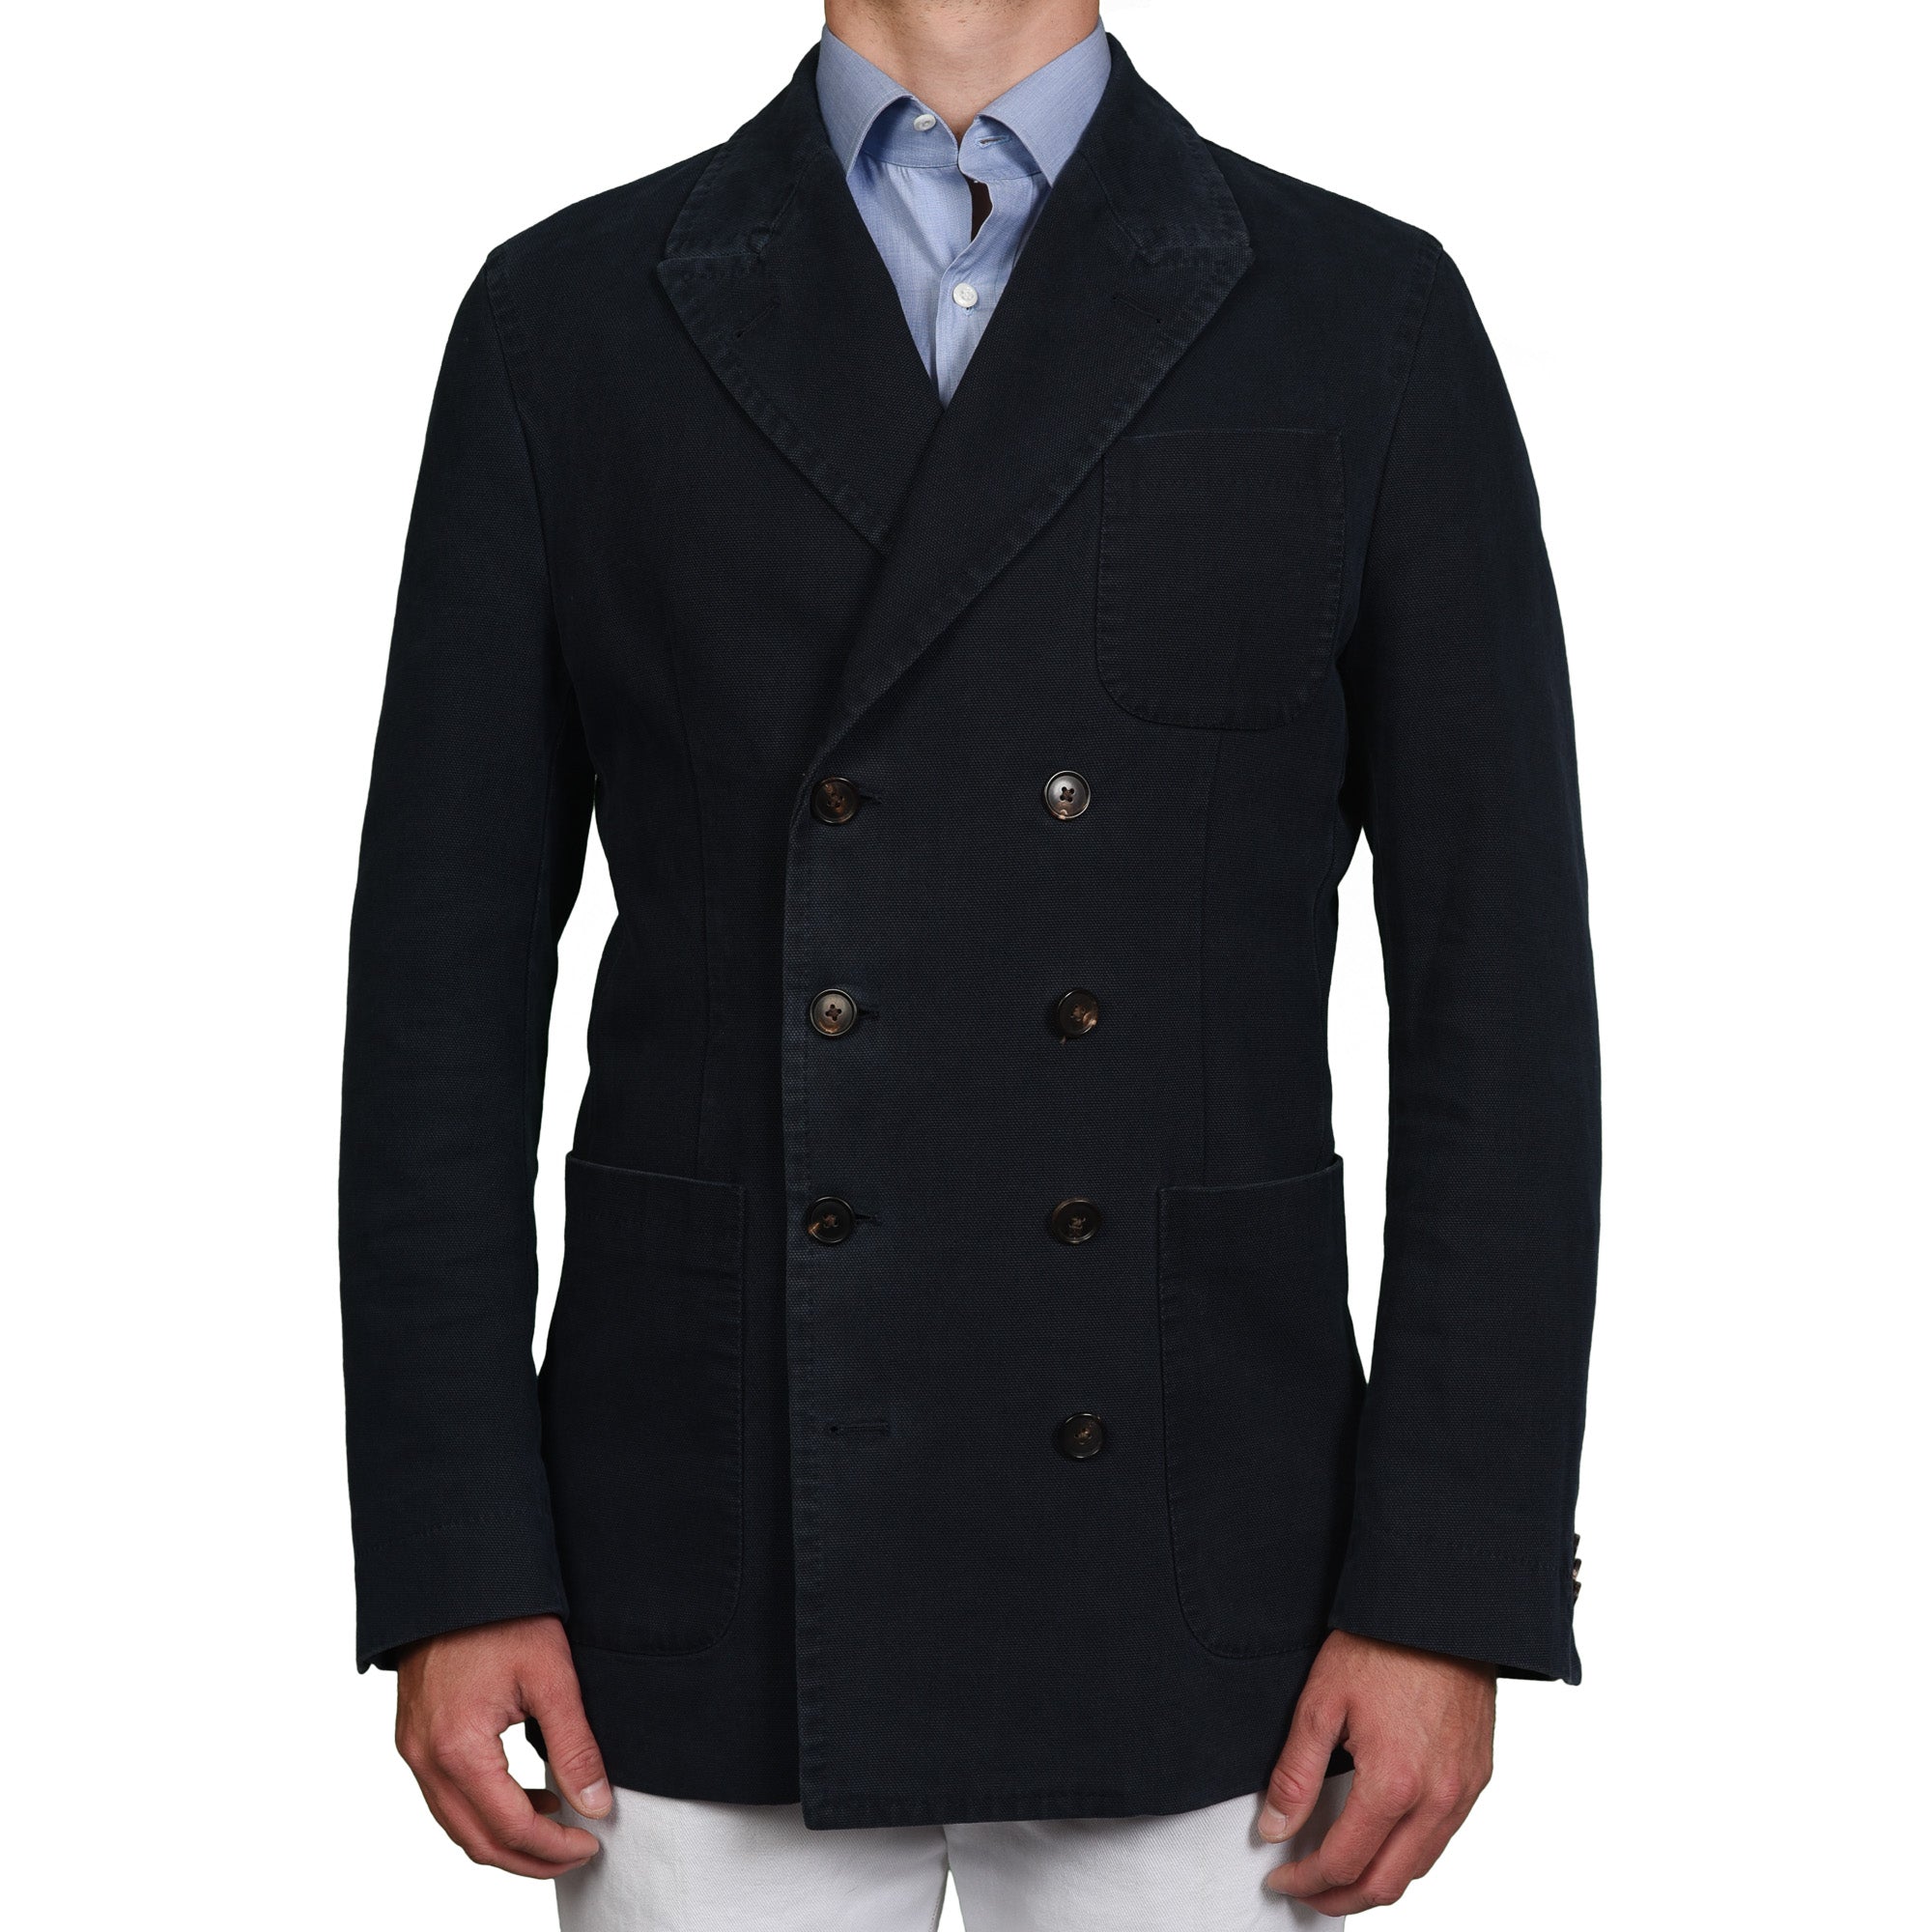 LARUSMIANI MILANO Navy Blue "Ice Cotton" DB Pea Coat Jacket EU 54 US 44 LARUSMIANI